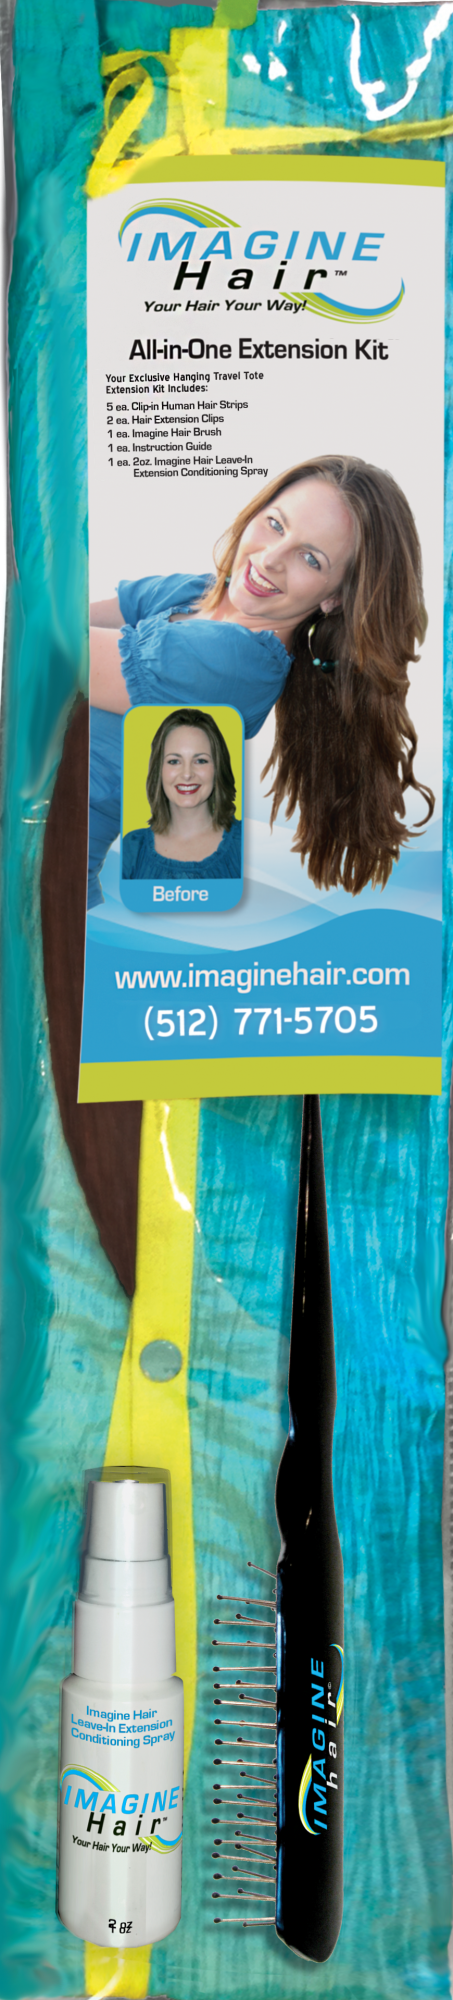 V-light 10D Hair Extensions Experience kit （free shiping）